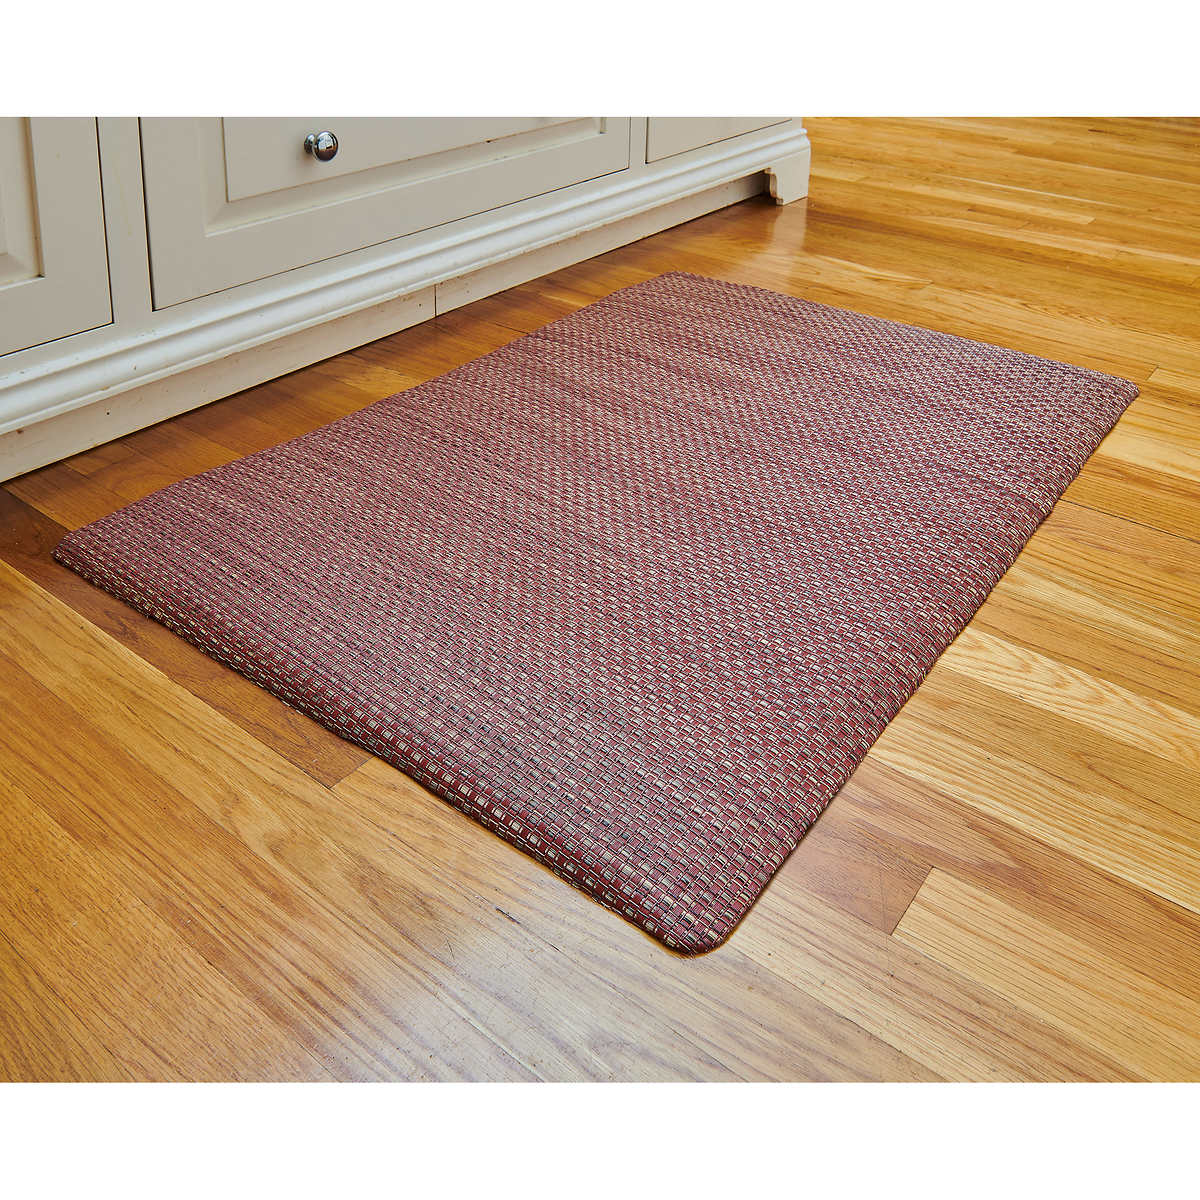 Luxe Therapeutic Floor Mats